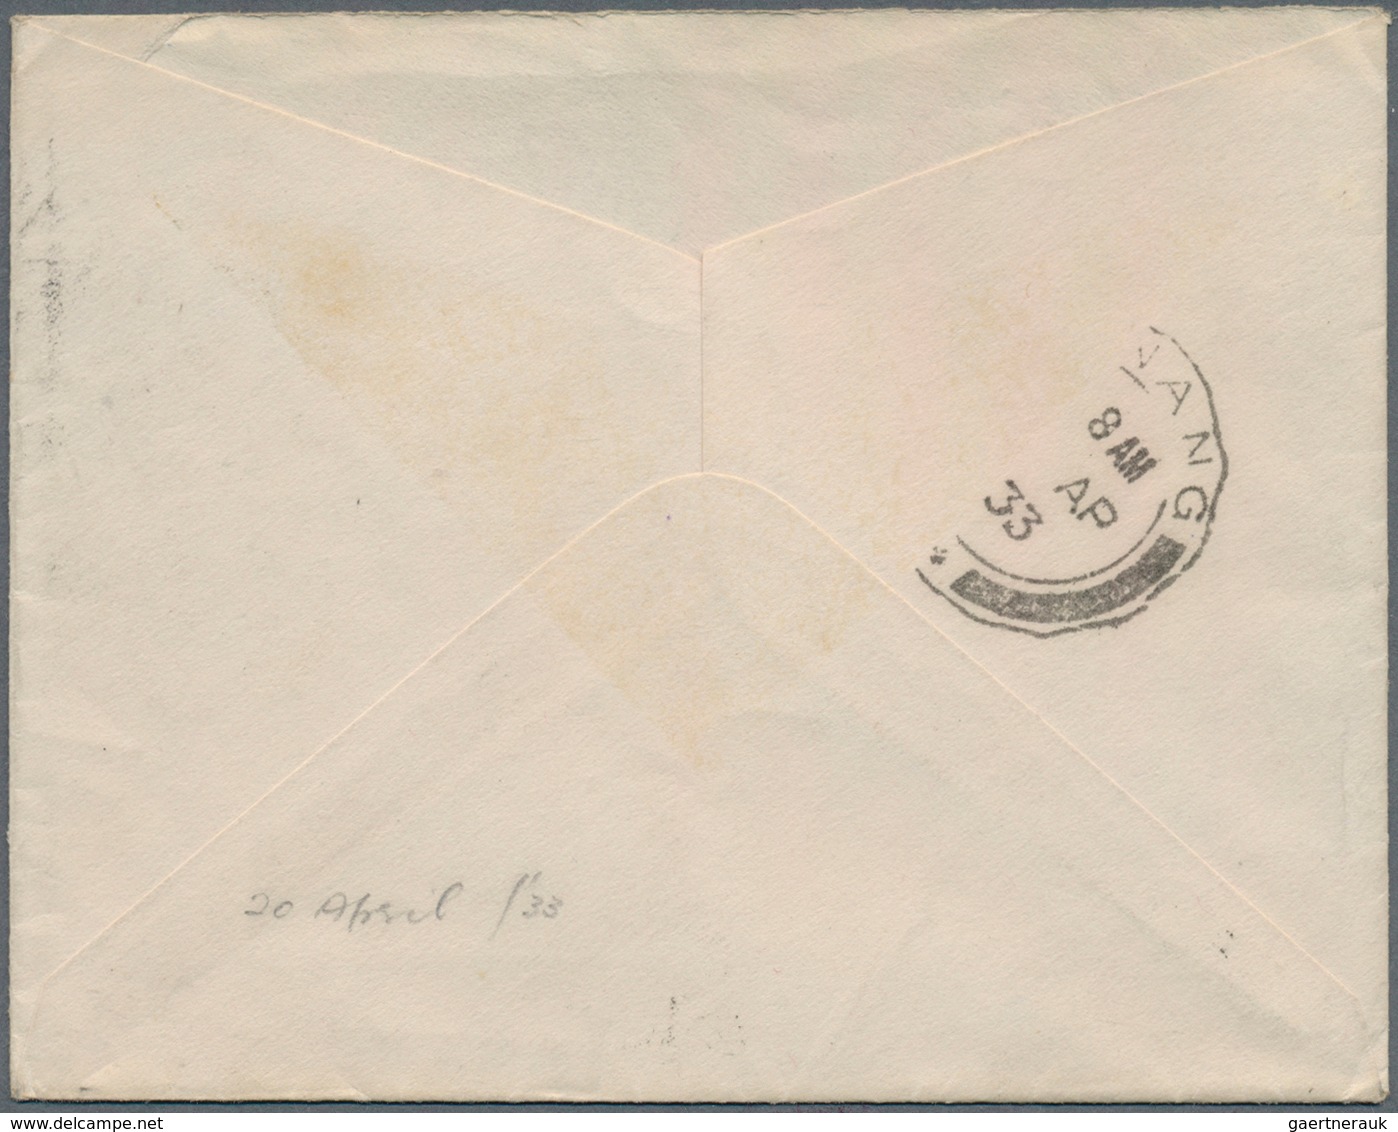 Malaiische Staaten - Selangor: 1933 (20.4.), Airmail Cover Endorsed 'Dutch Air Mail Alor Star-London - Selangor